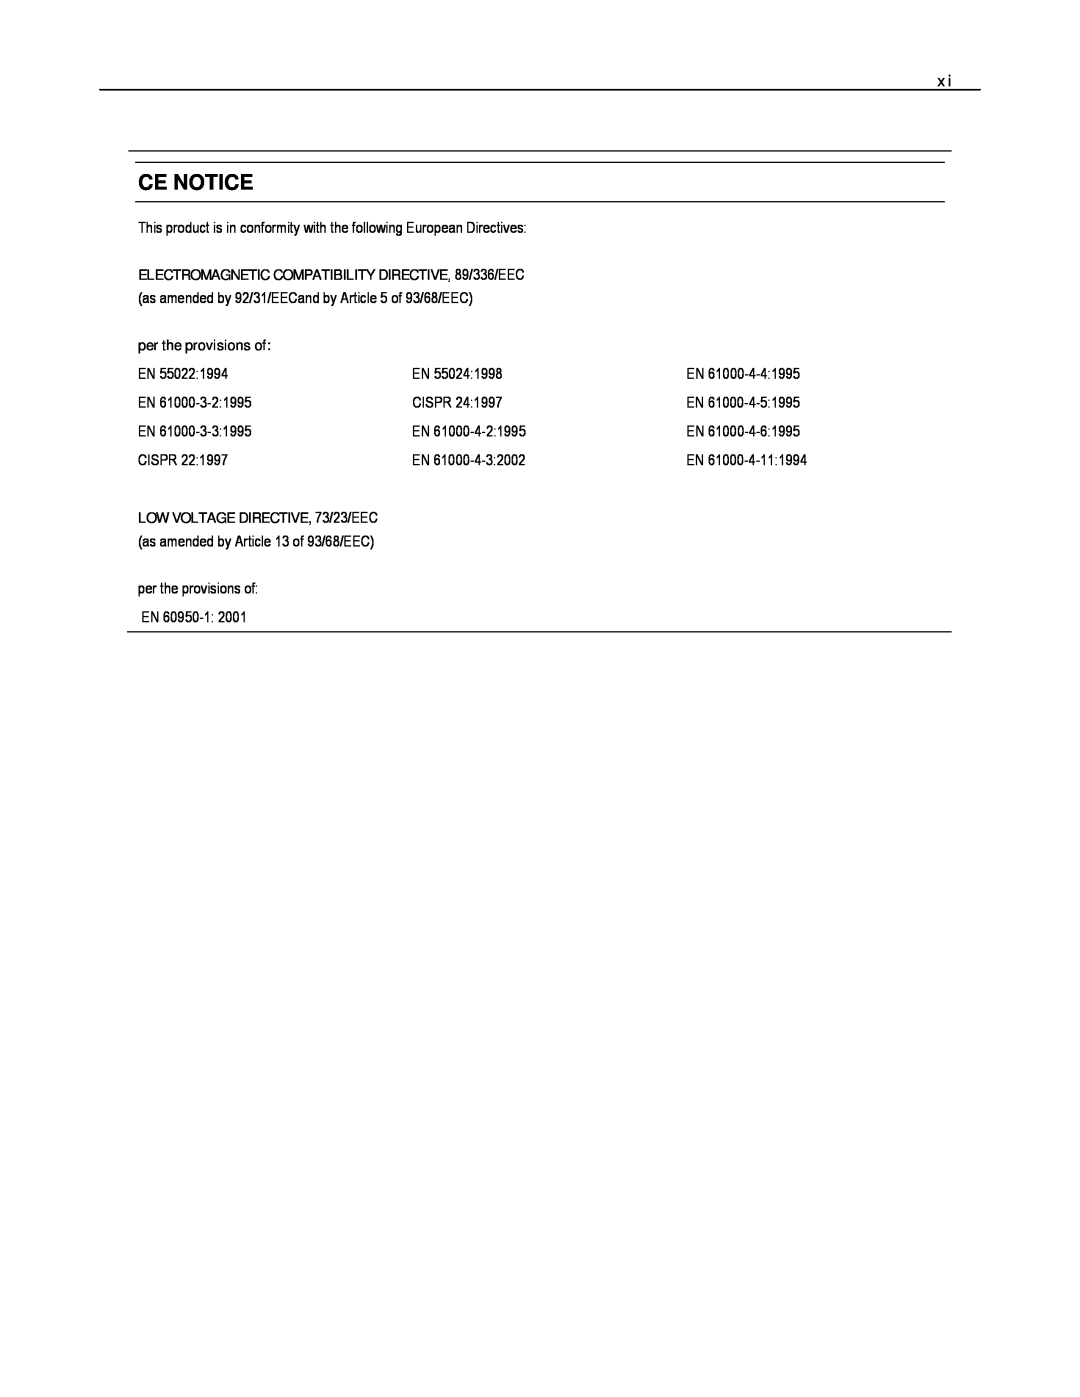 Toshiba EVR16-X, EVR8-X, EVR32-X, HVR32-X, HVR8-X, HVR16-X user manual Ce Notice, per the provisions of EN 60950-1 